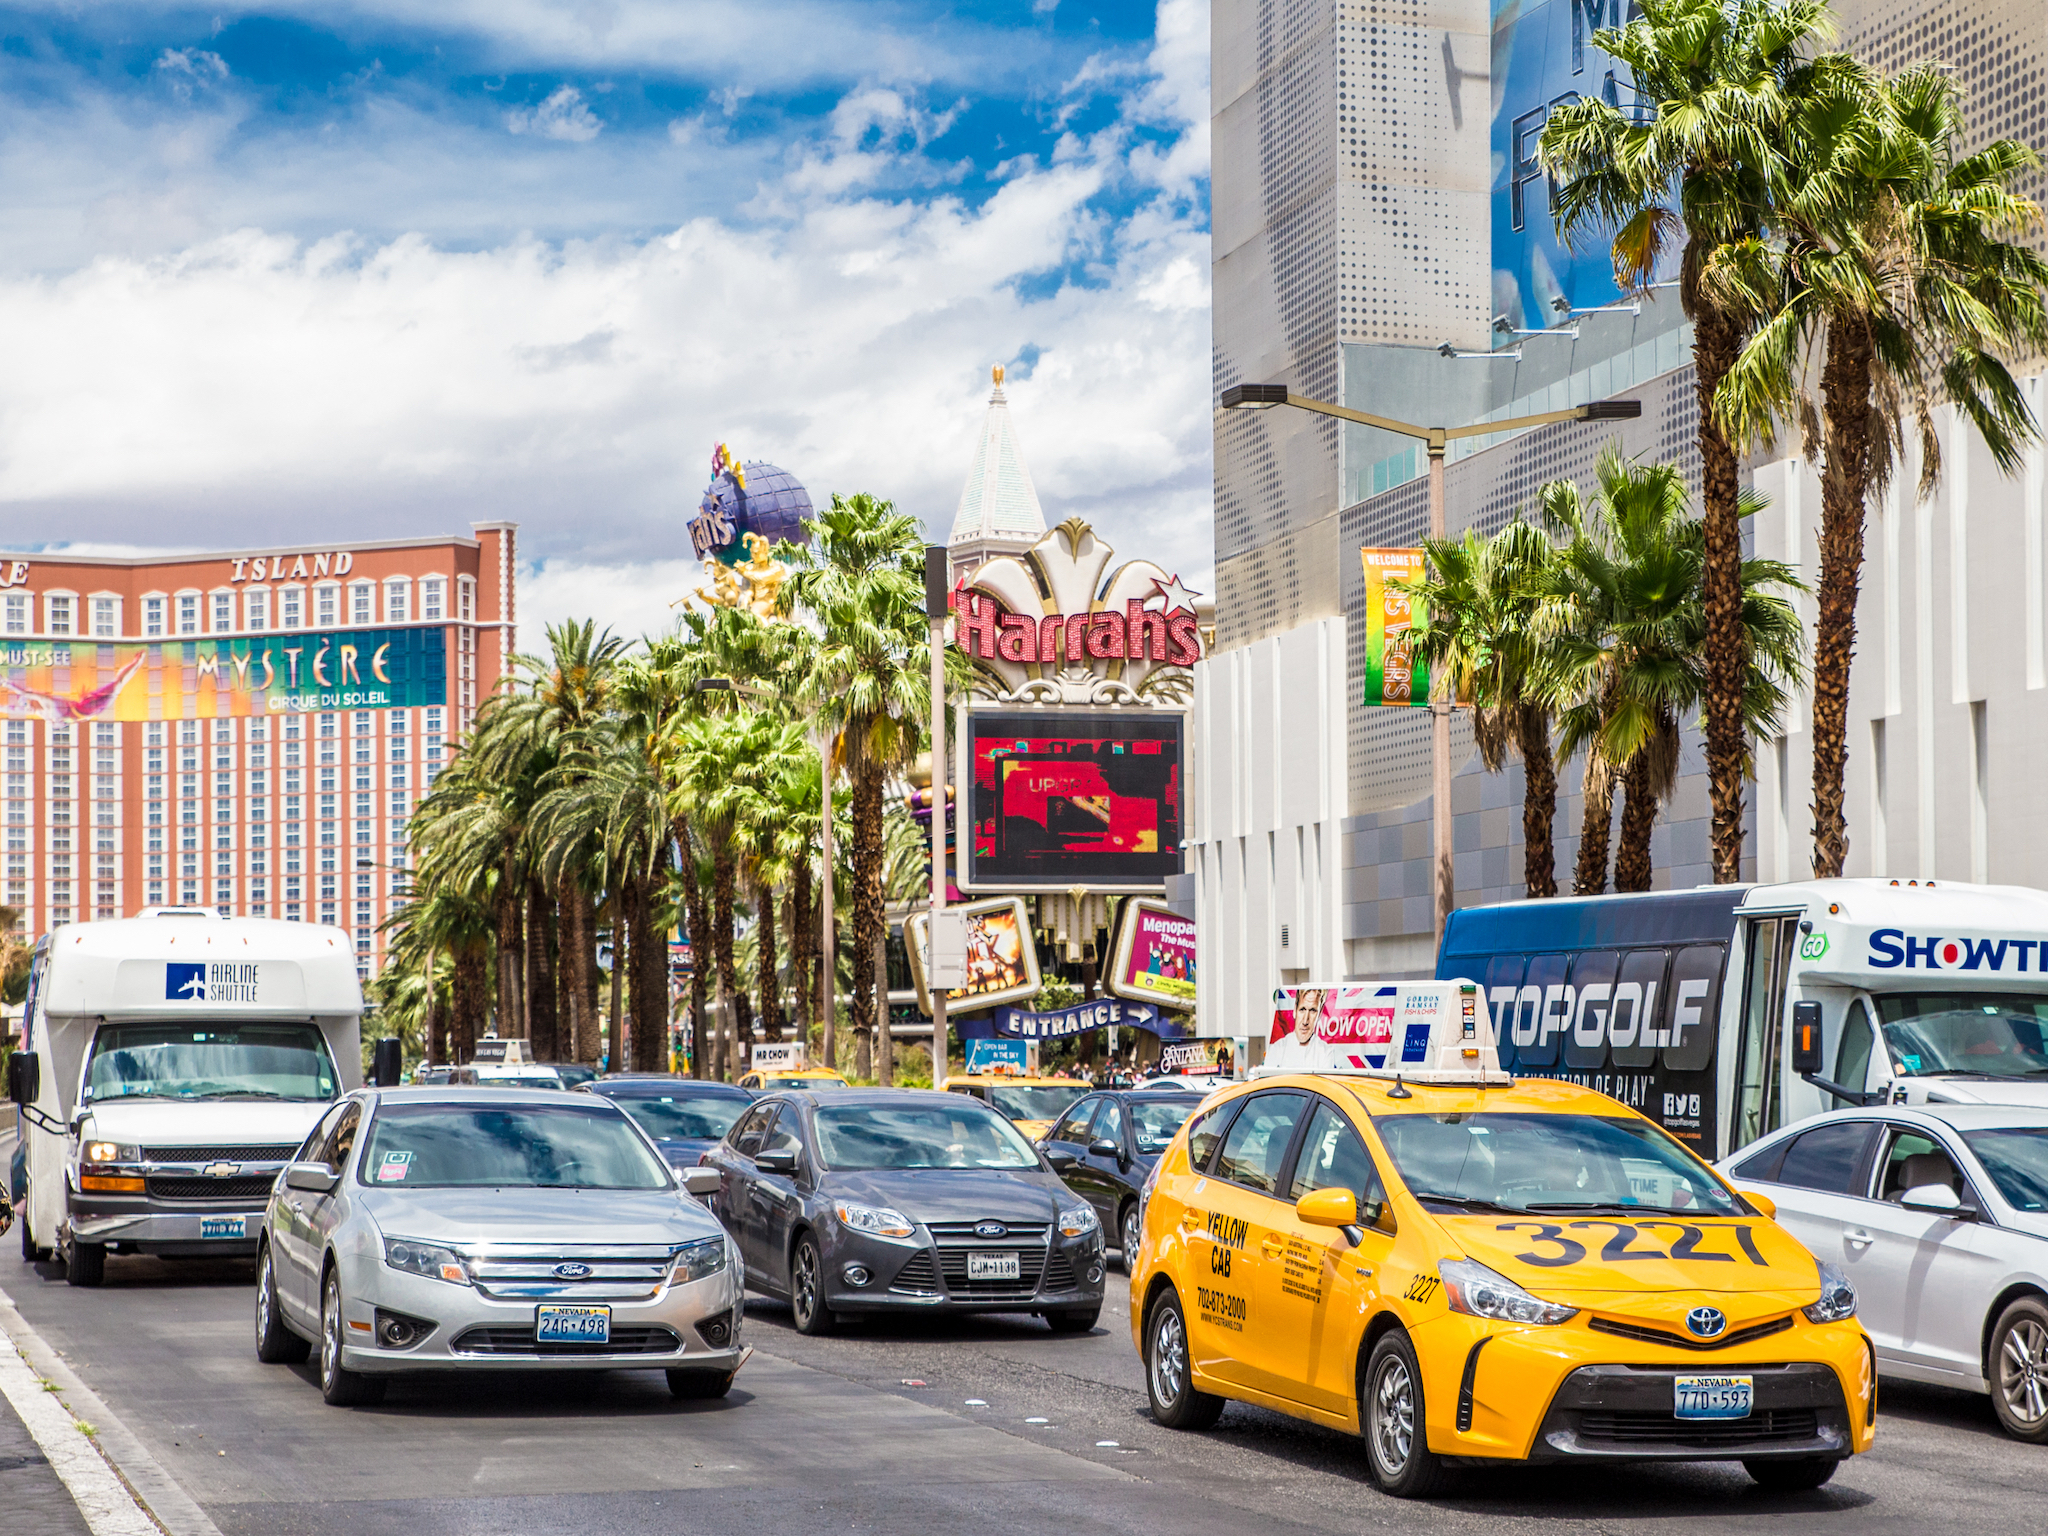 Taxis in Las Vegas, Nevada